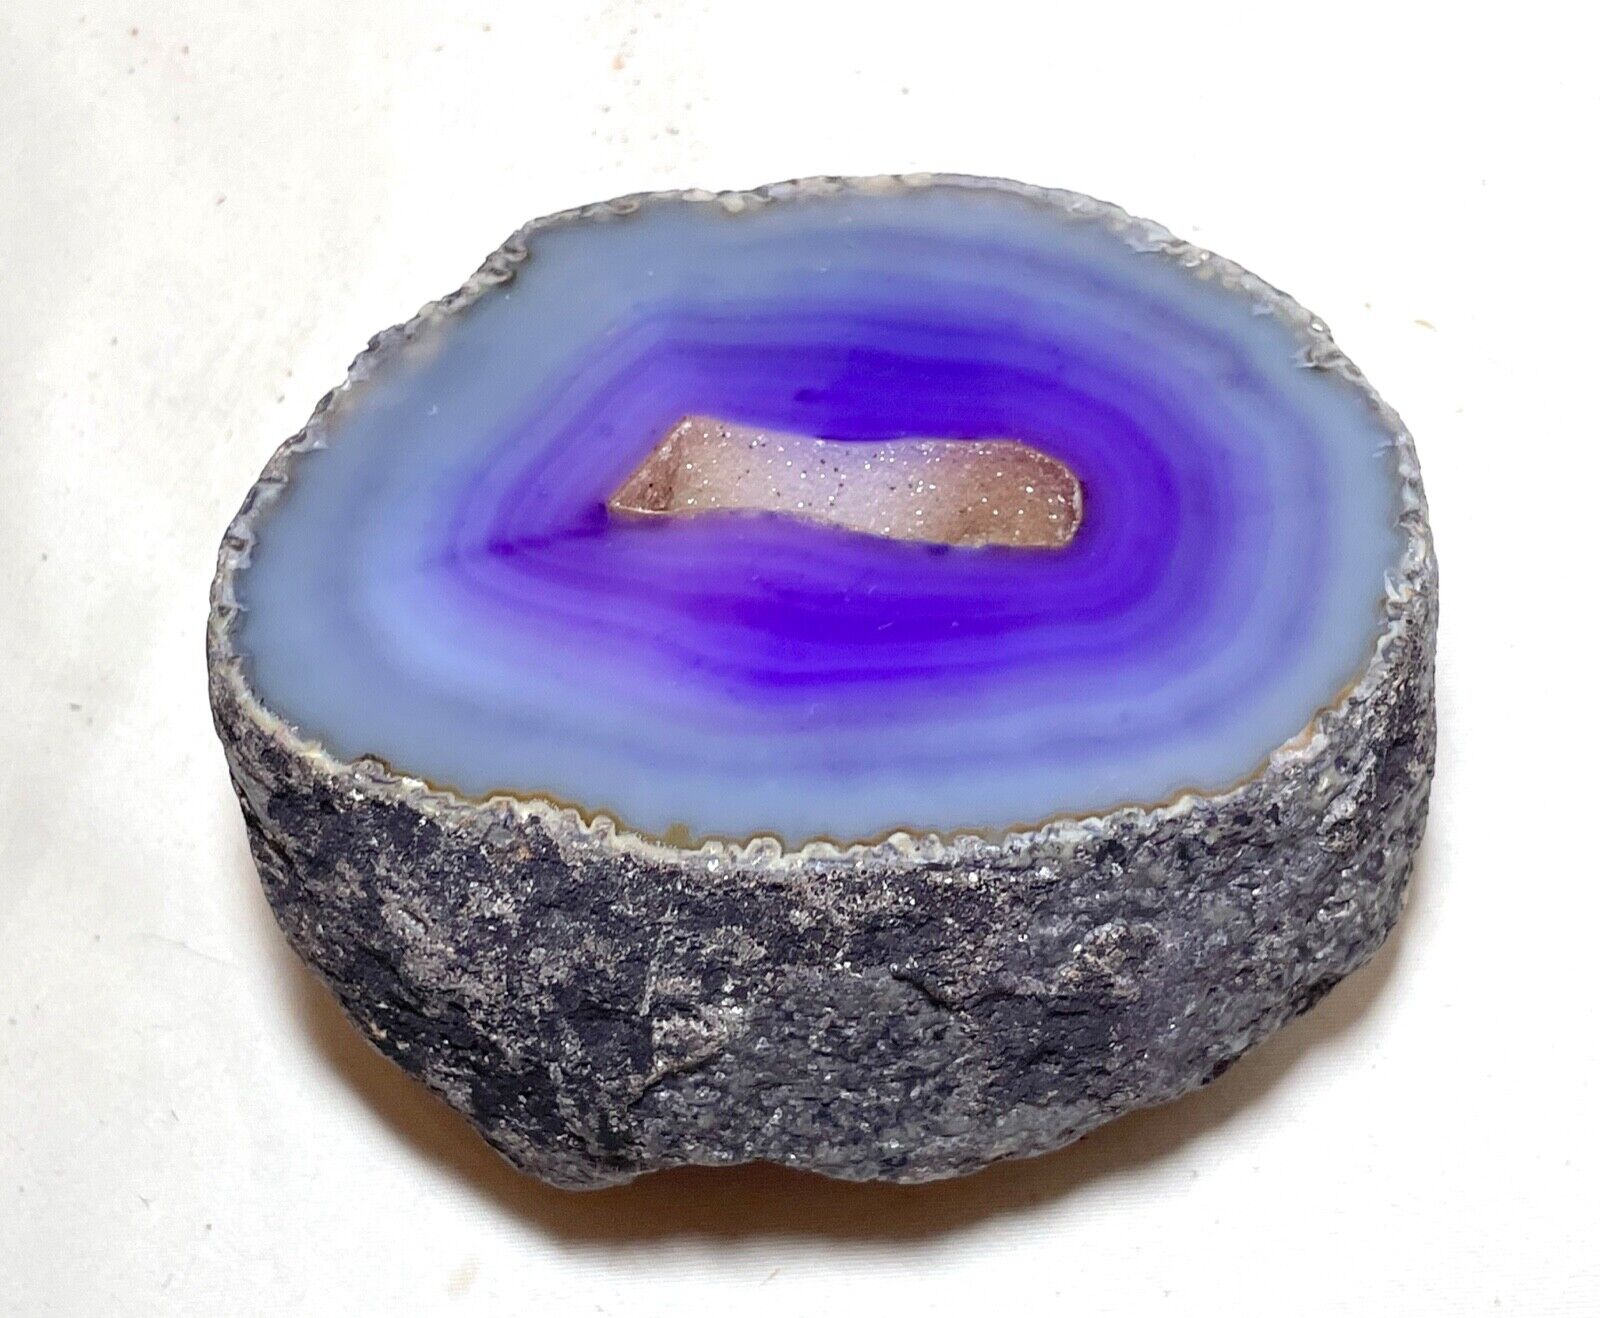 cut natural vibrant purple agate stone banded geode specimen rock mineral 